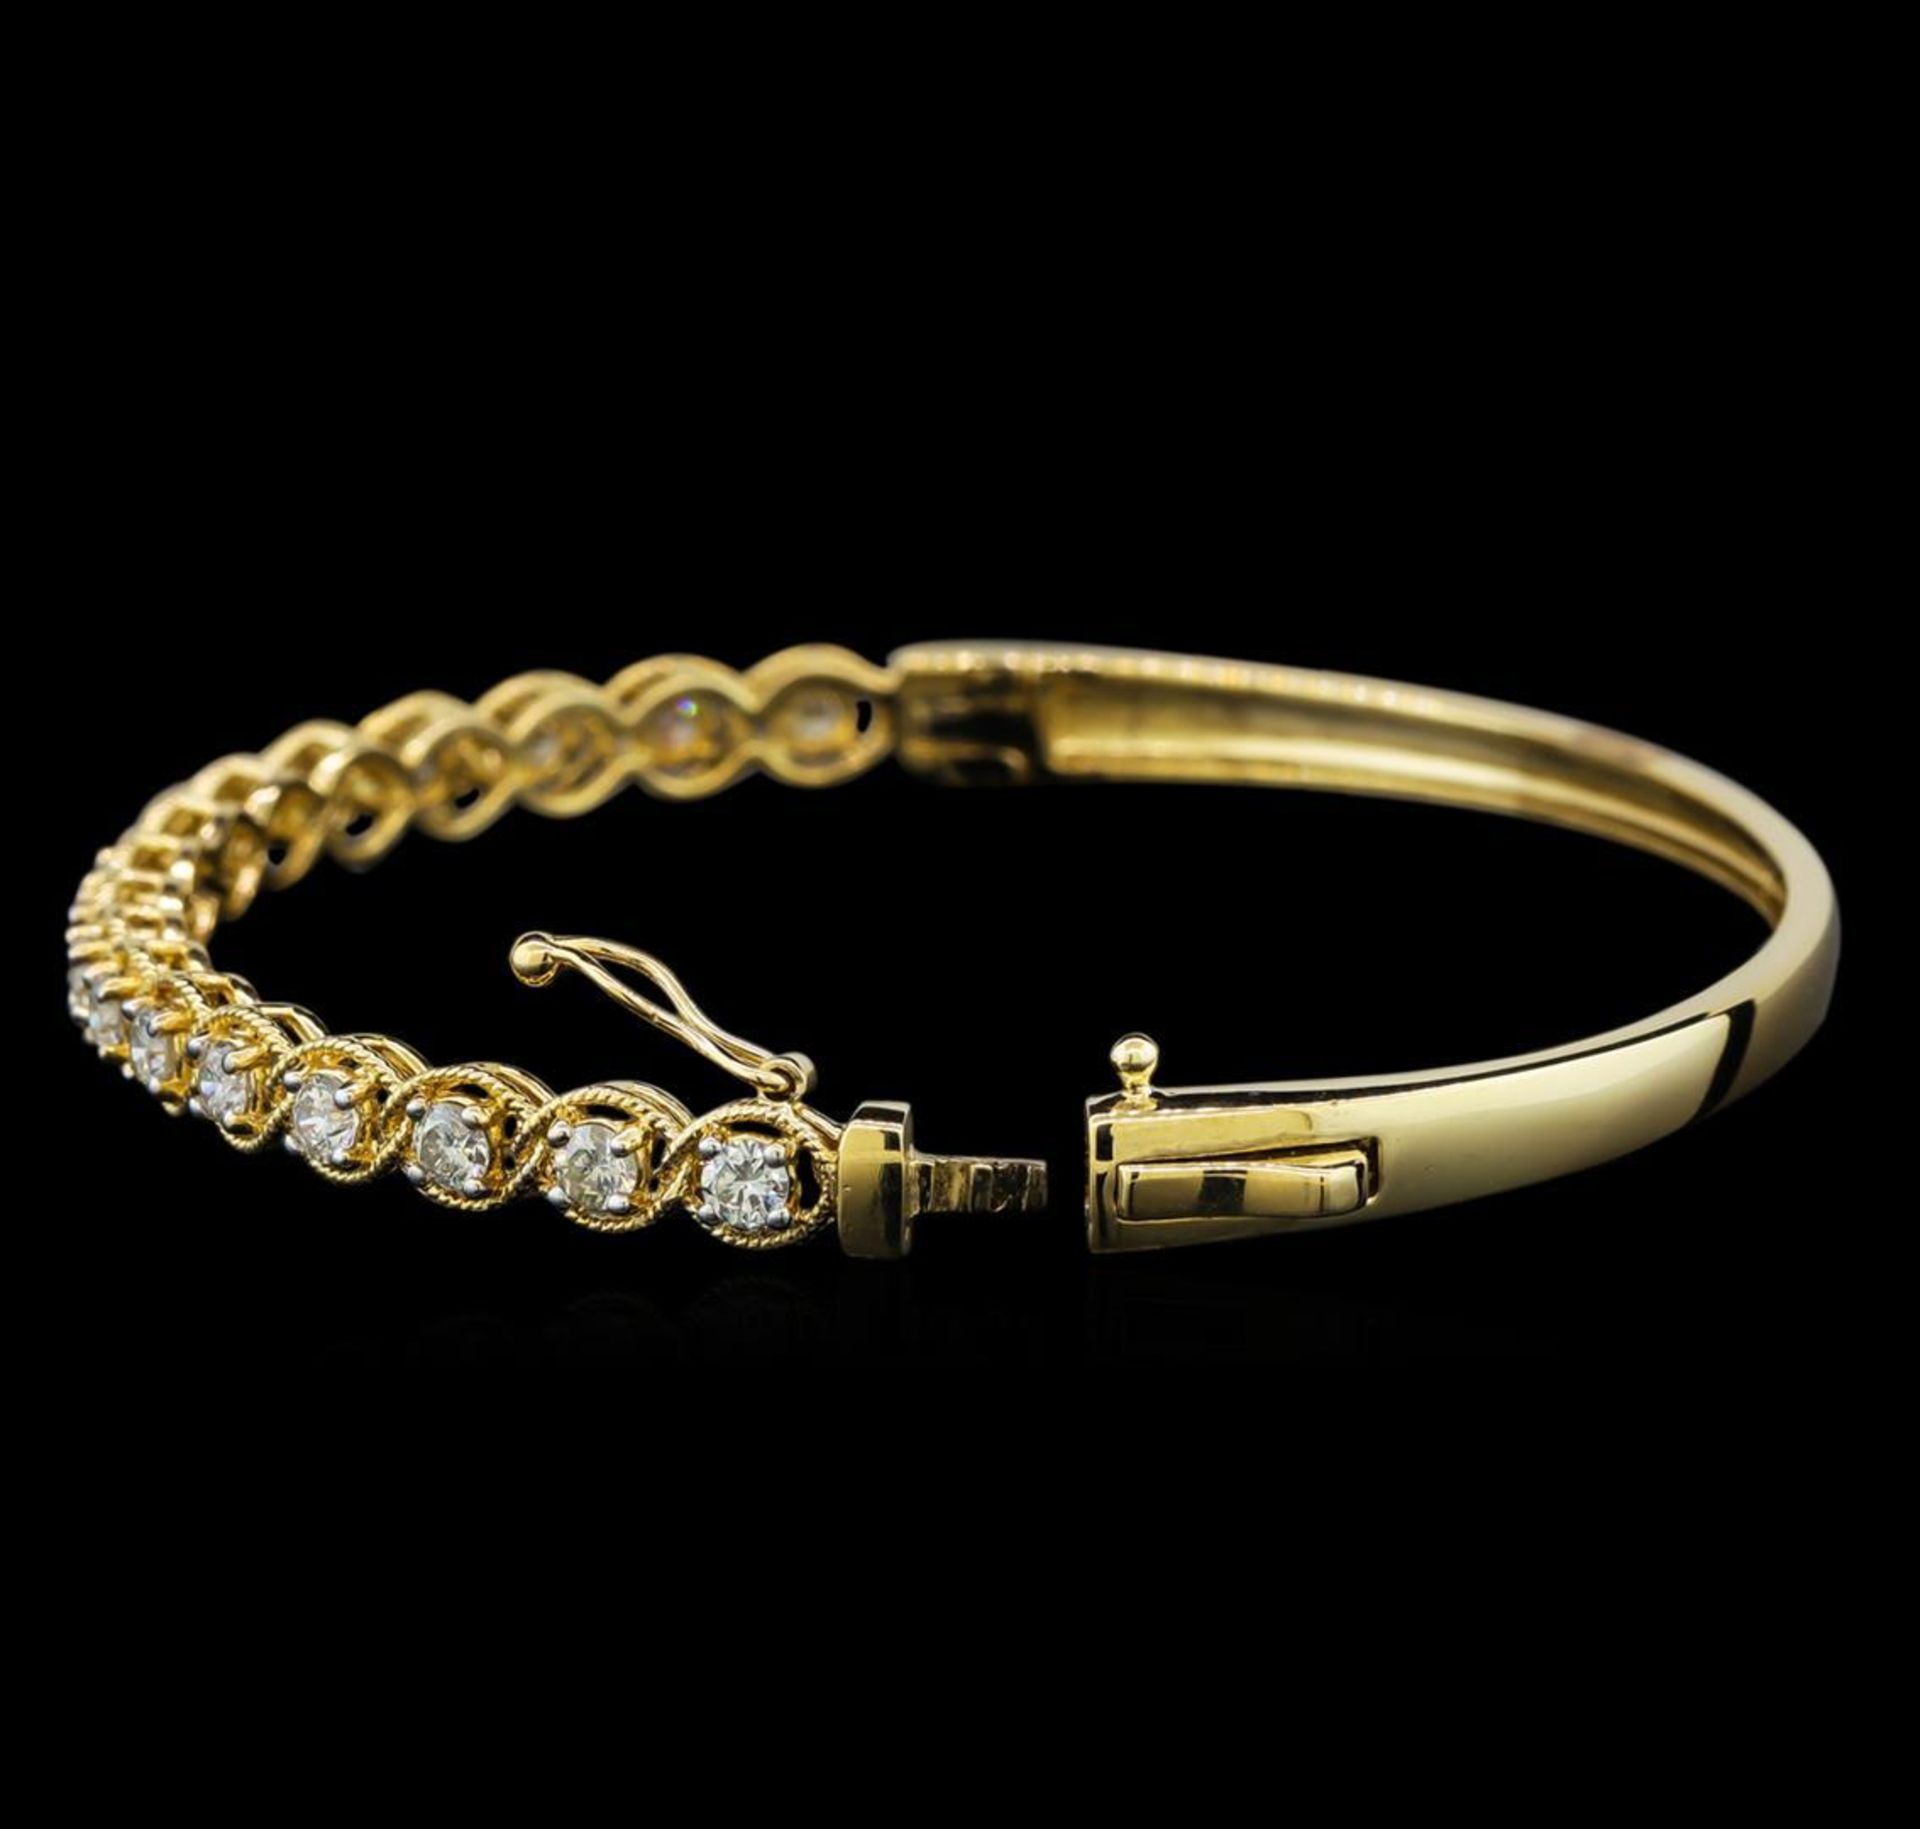 1.57 ctw Diamond Bangle Bracelet - 14KT Yellow Gold - Image 3 of 4